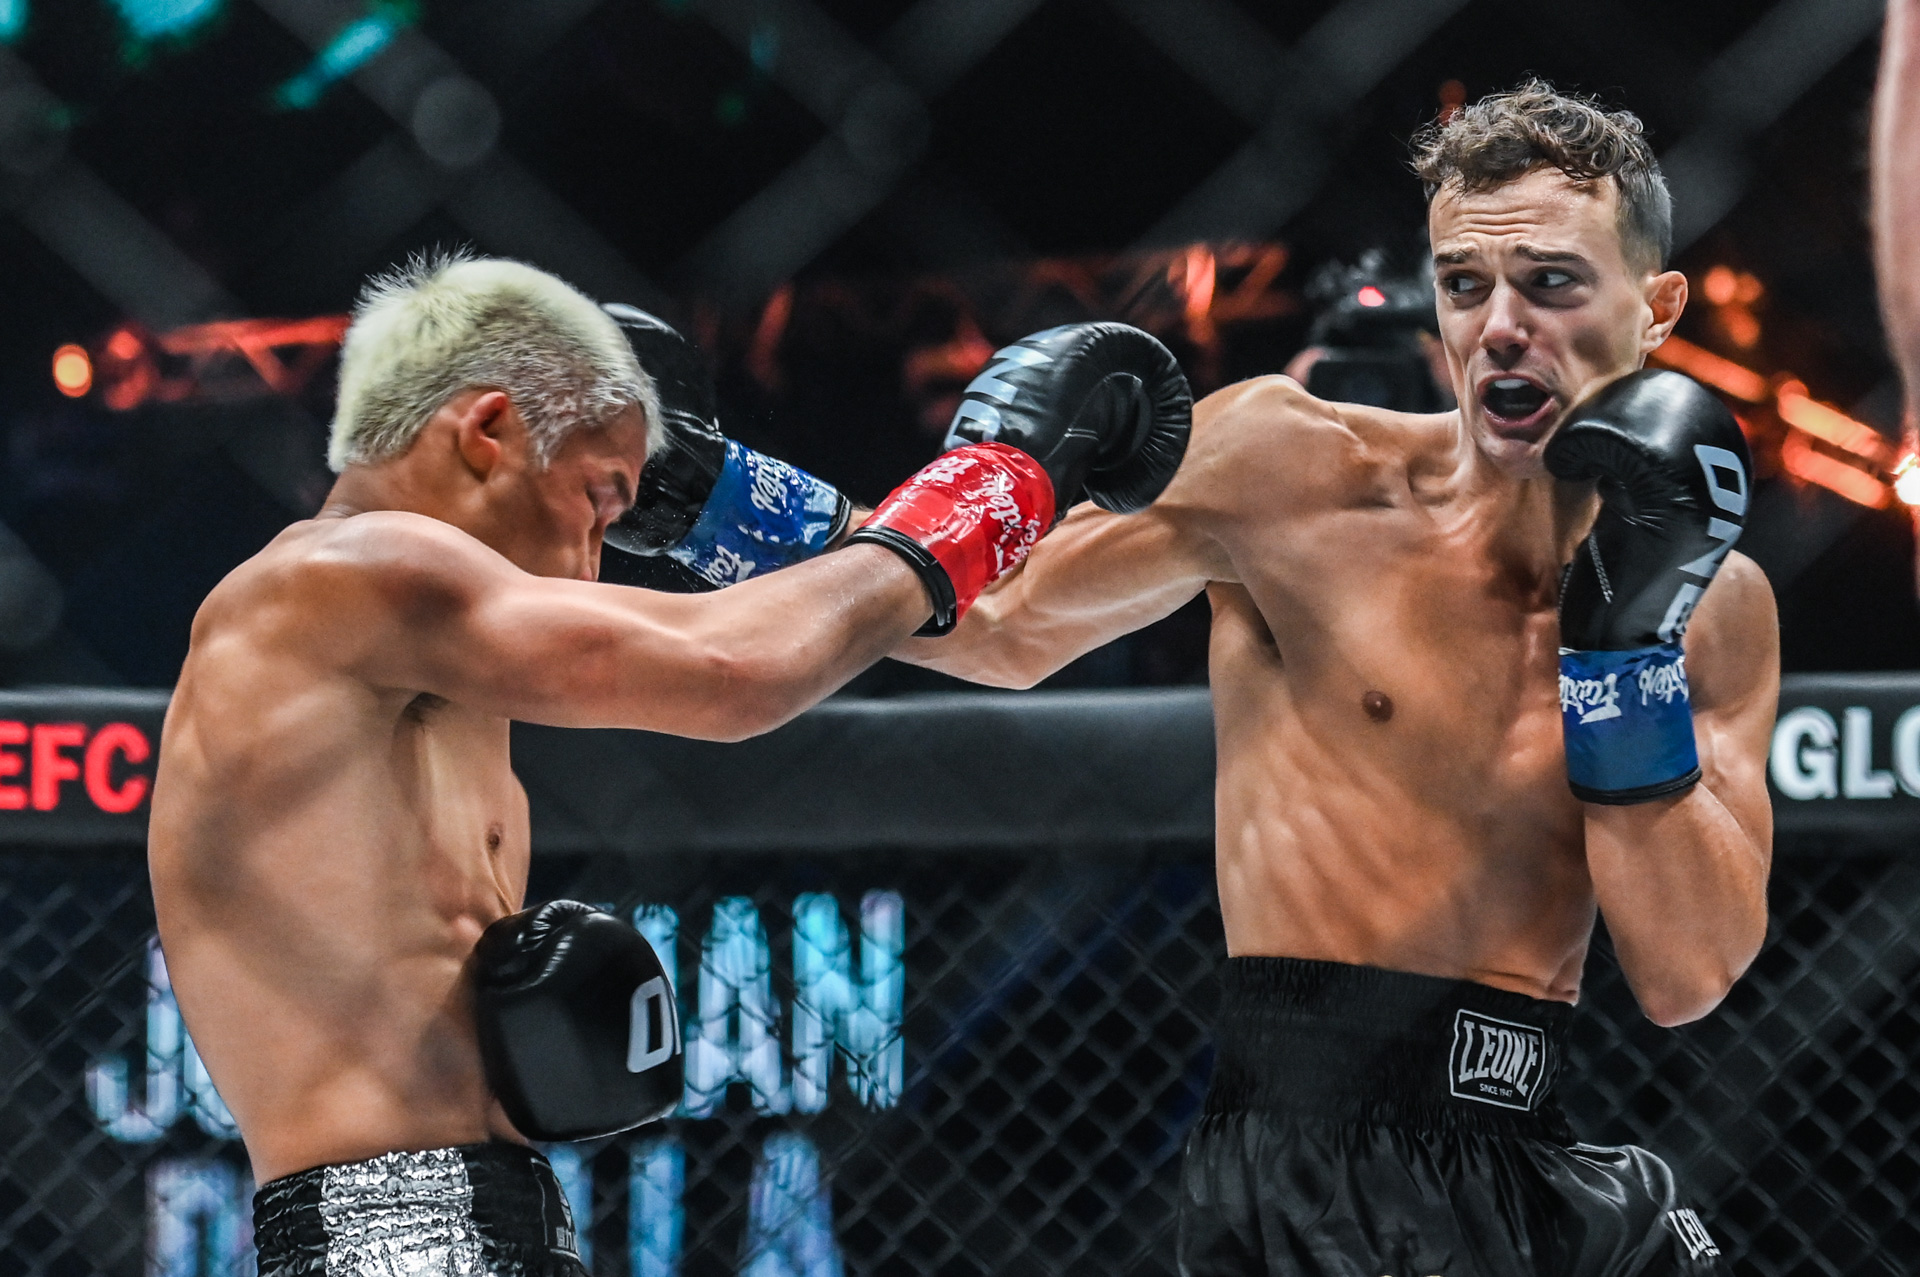 Jonathan Di Bella lands punches on Zhang Peimian